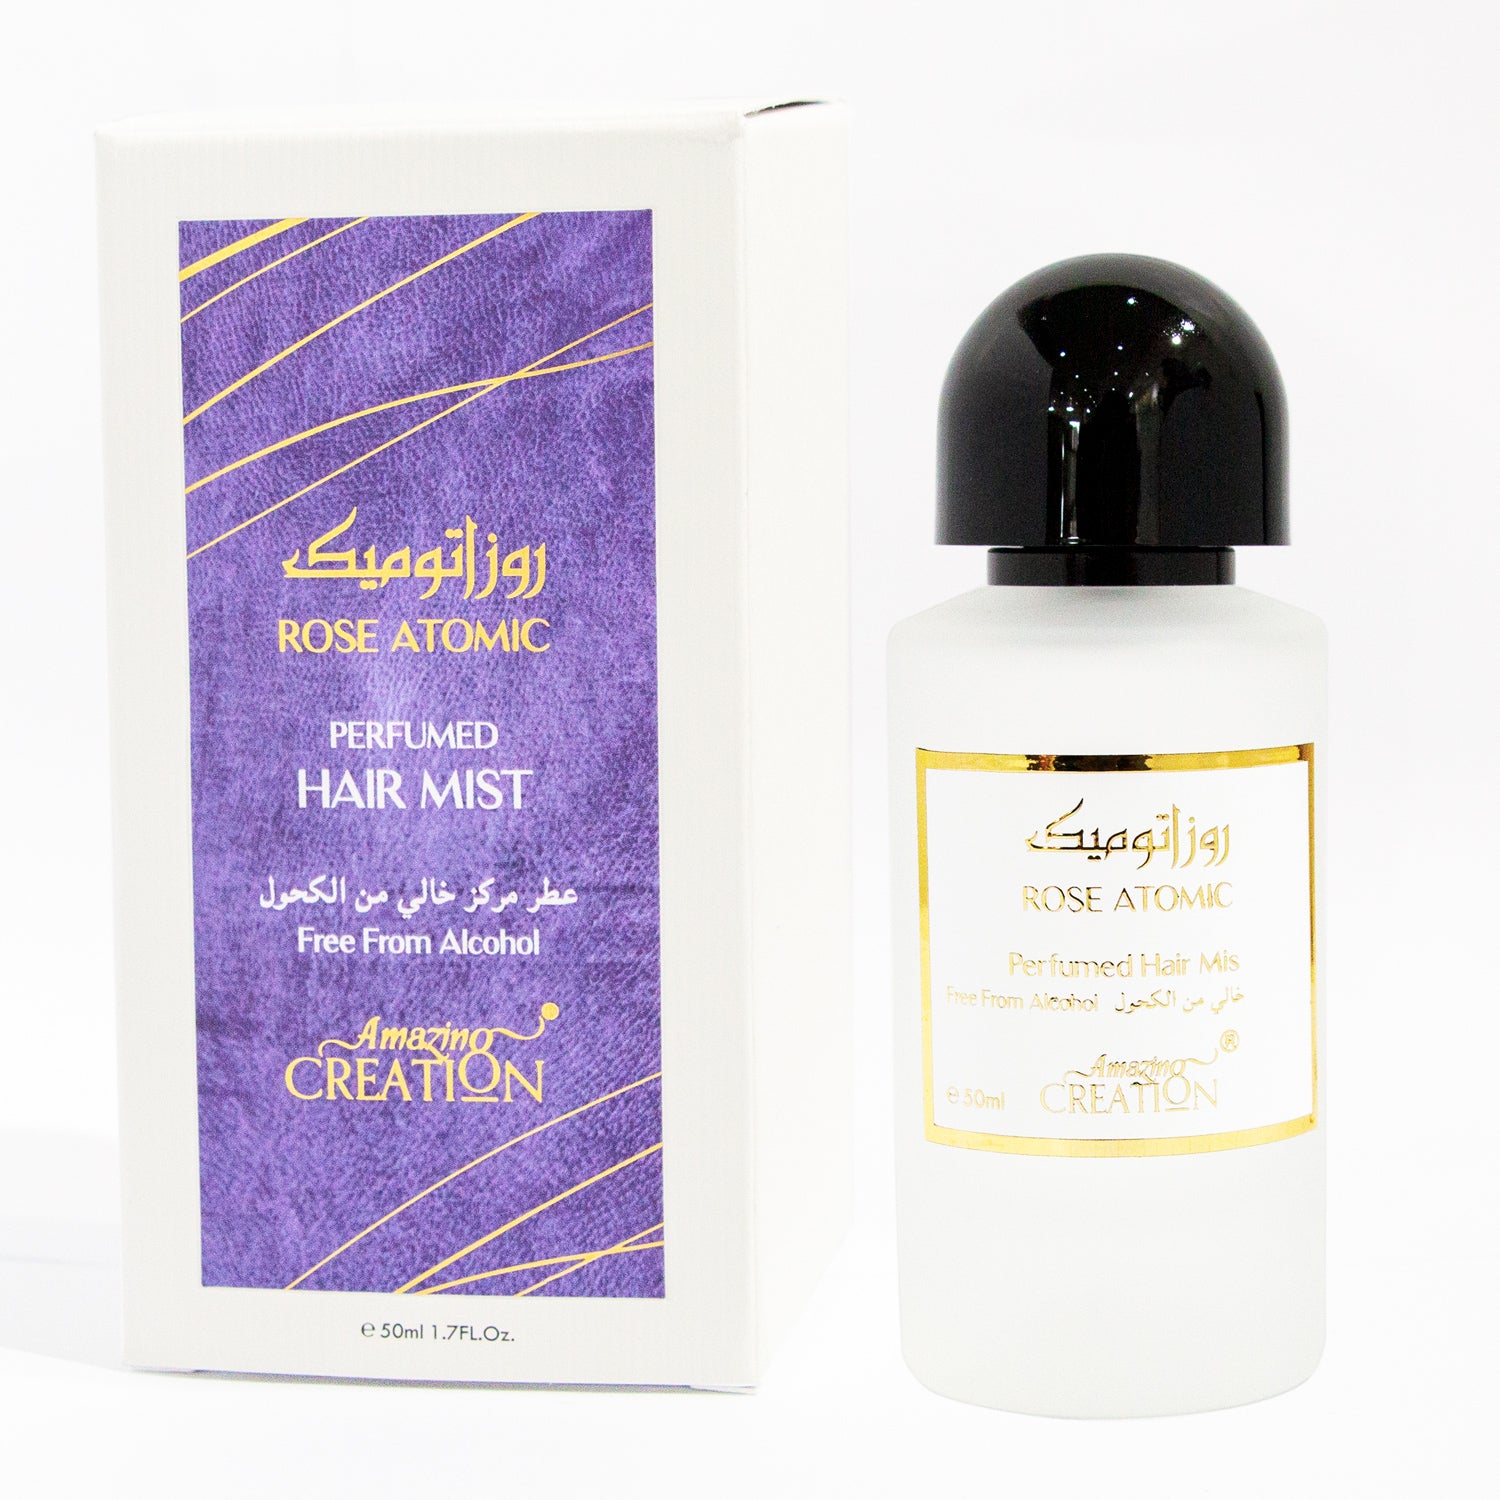 Amazing Creation Imagination Perfume For Men EDP 50ml – DubaiOudh